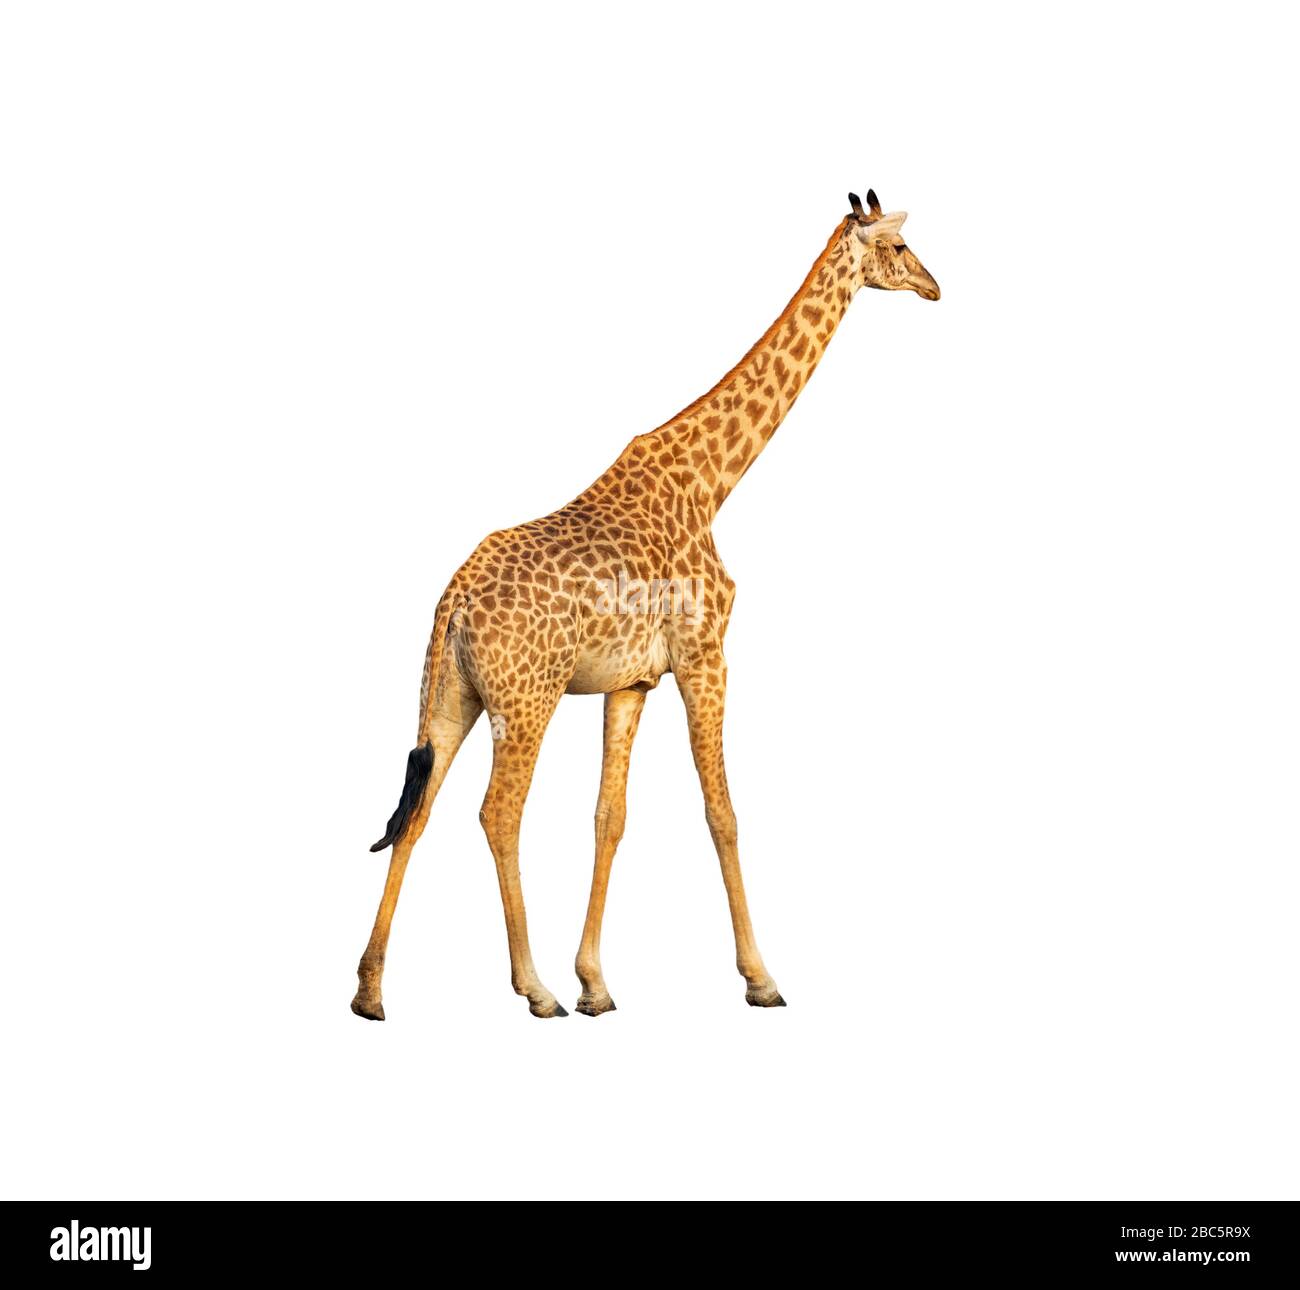 Giraffe walking profile view isolated on white background Stock Photo